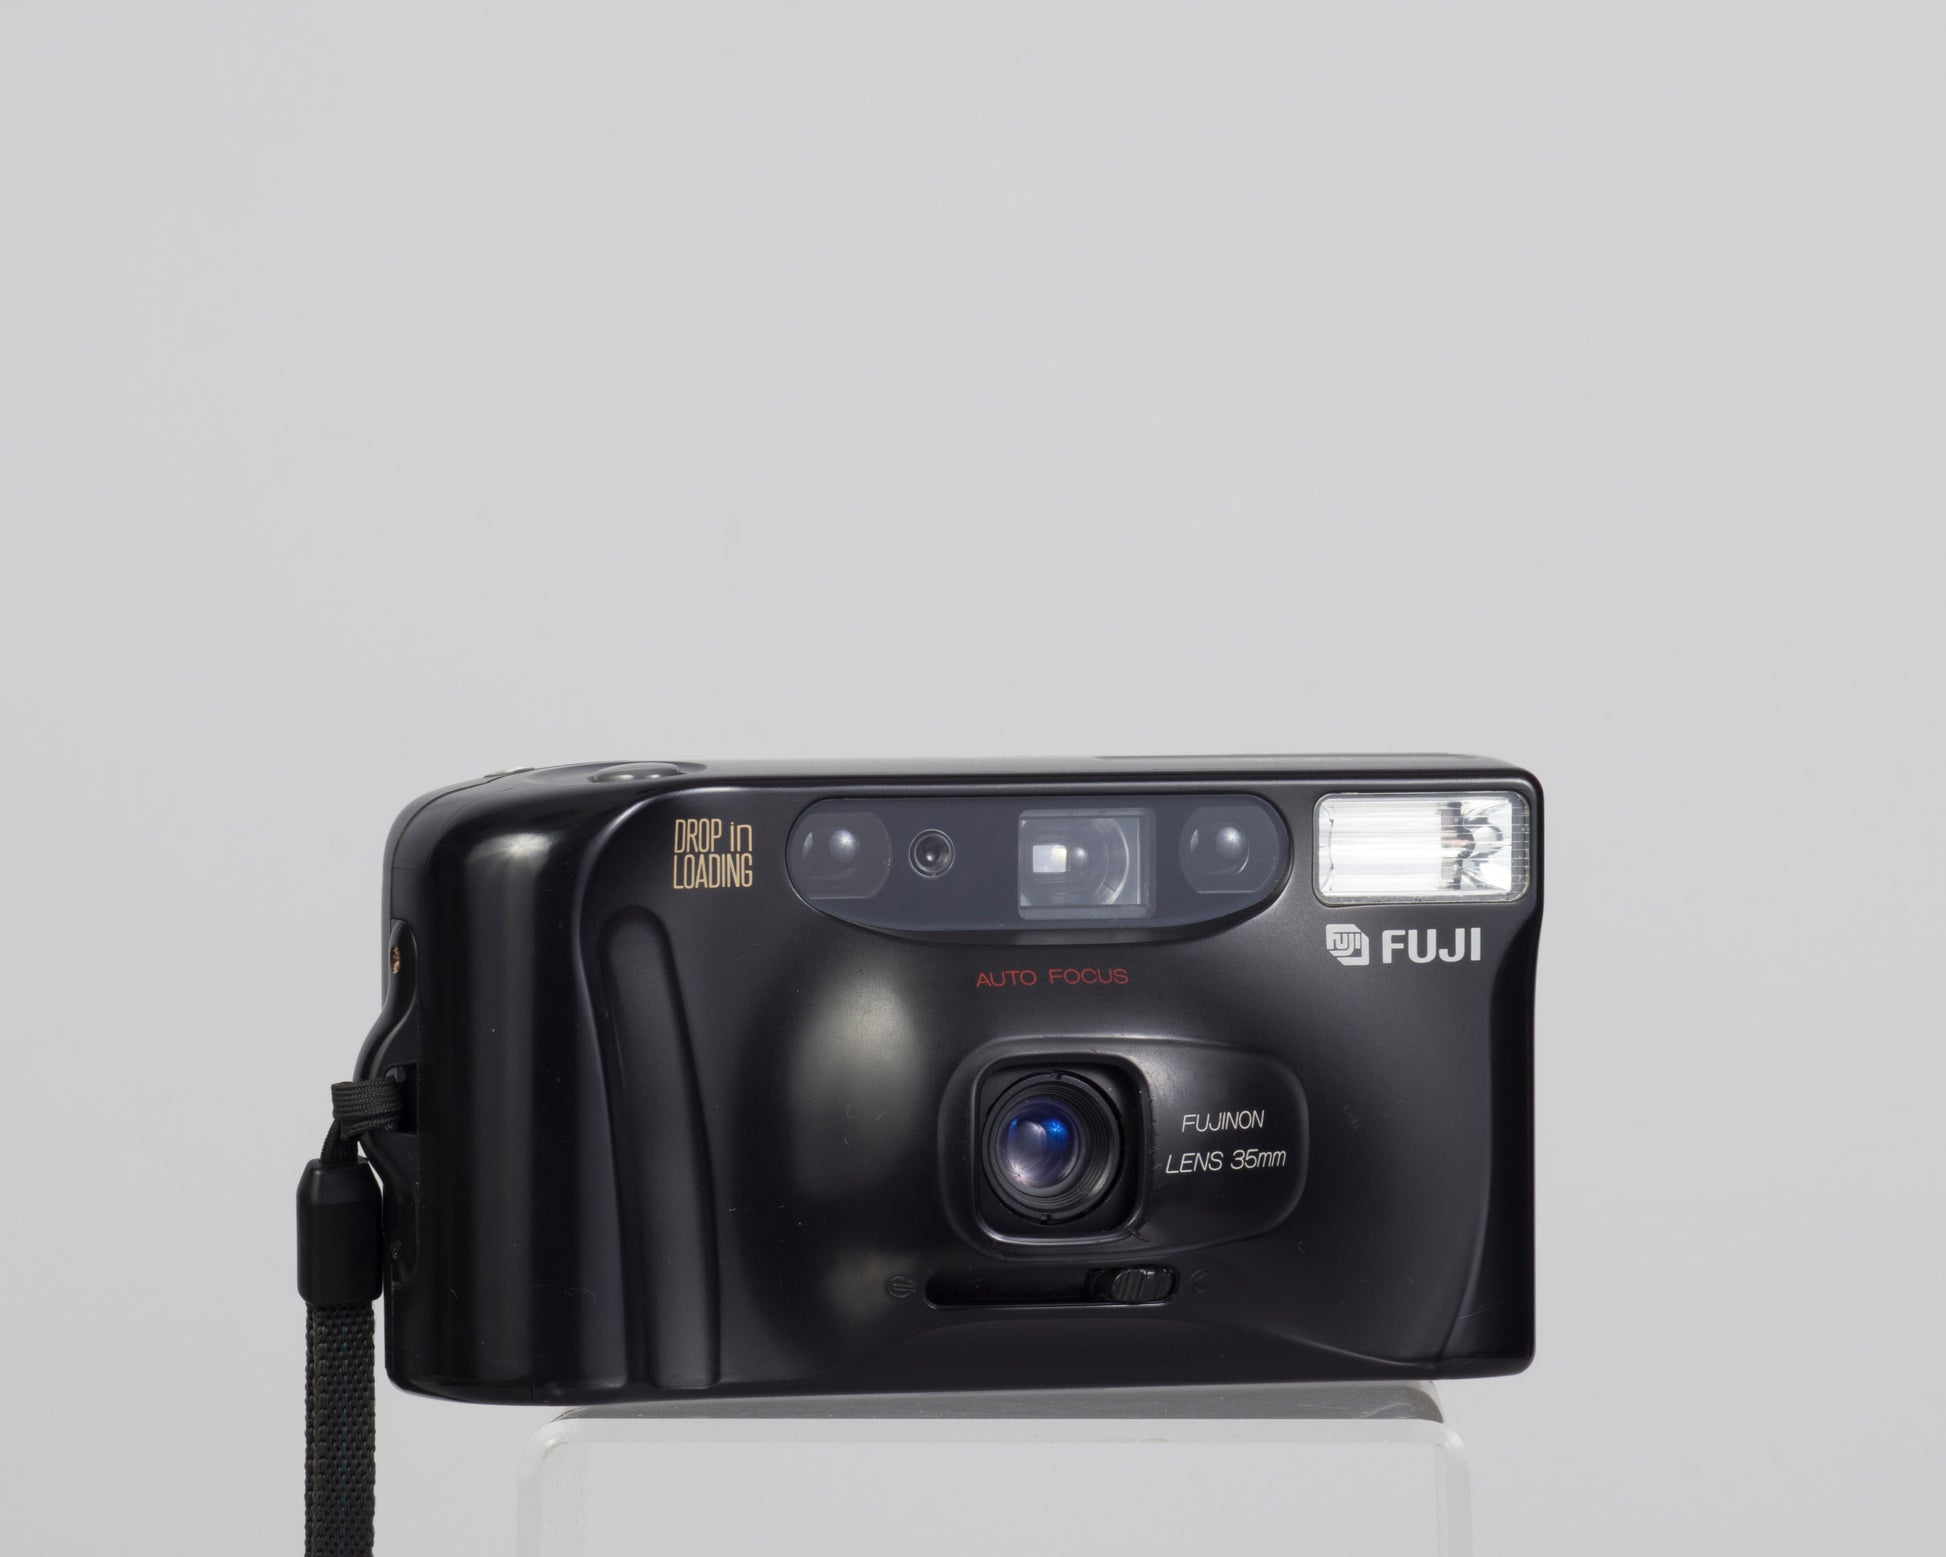 The Fujifilm DL-80 (aka Discovery 80) 35mm film camera